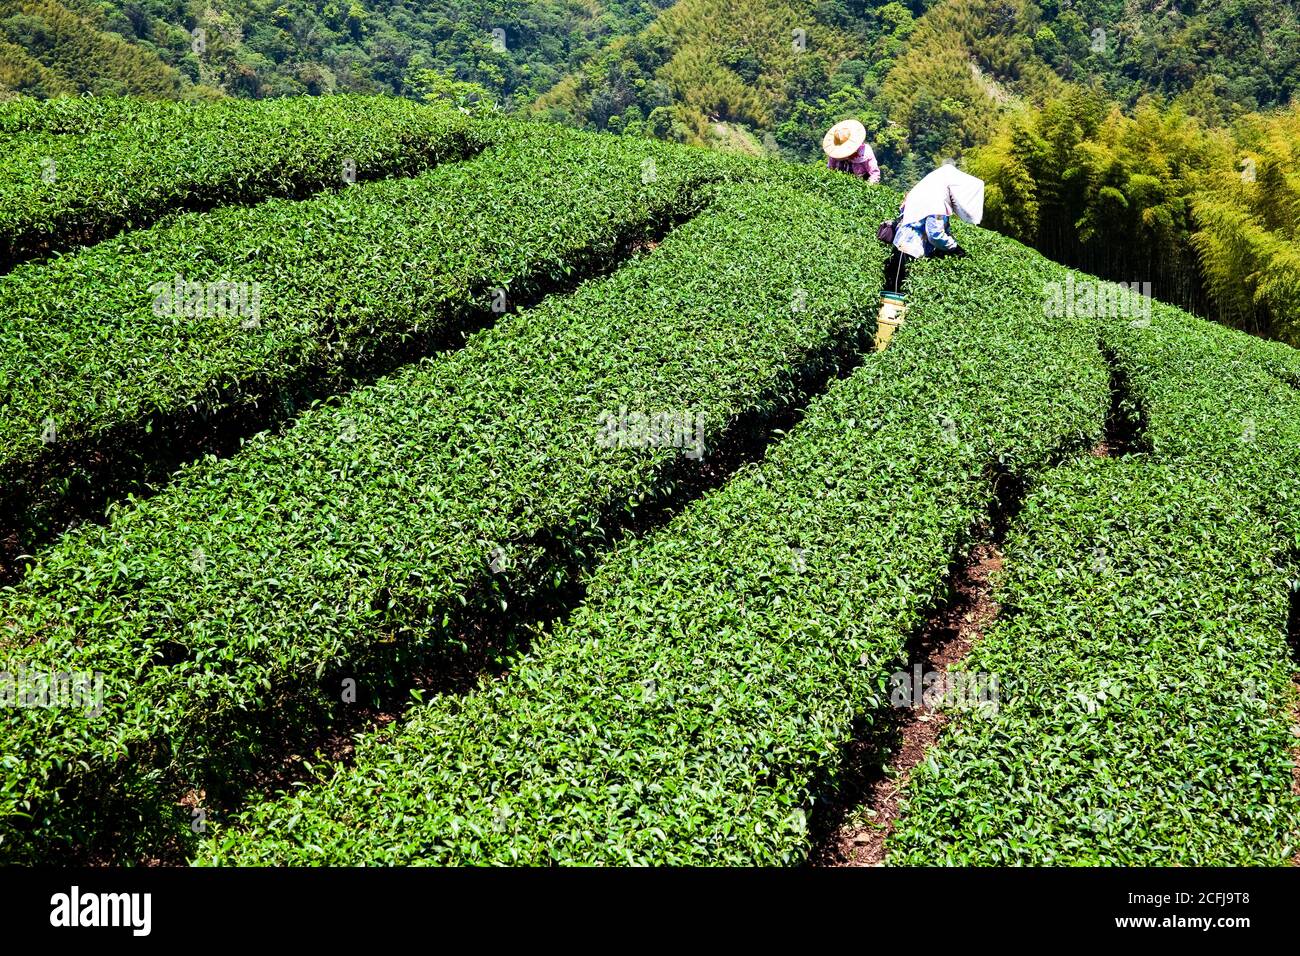 farmer picking tea leaves in a tea plantation of Taiwan. Stock Photo